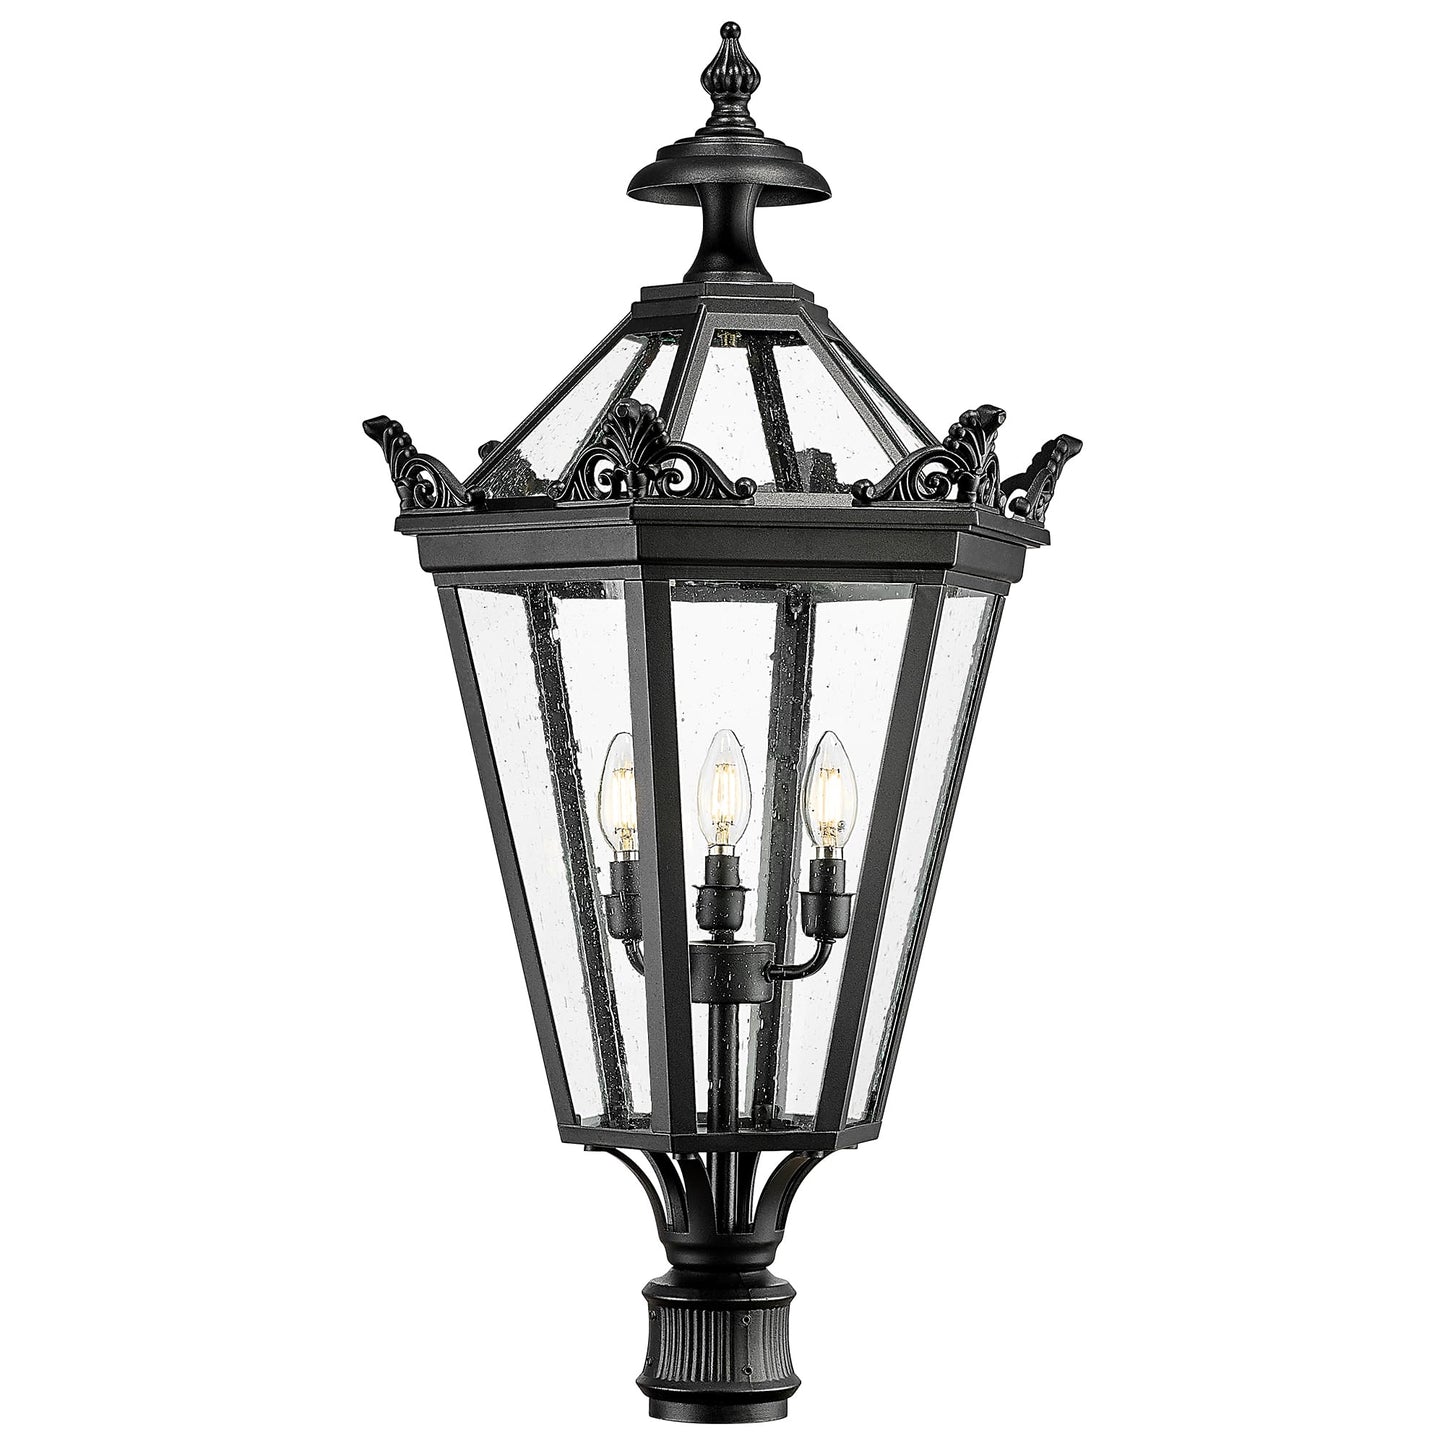 
                  
                    Emliviar Outdoor Large Post Lantern Light 33 Inch, Exterior Pillar Lamp for House Garden, Die-Cast Aluminum with Seeded Glass Shade, Black Finish, XE283P BK
                  
                